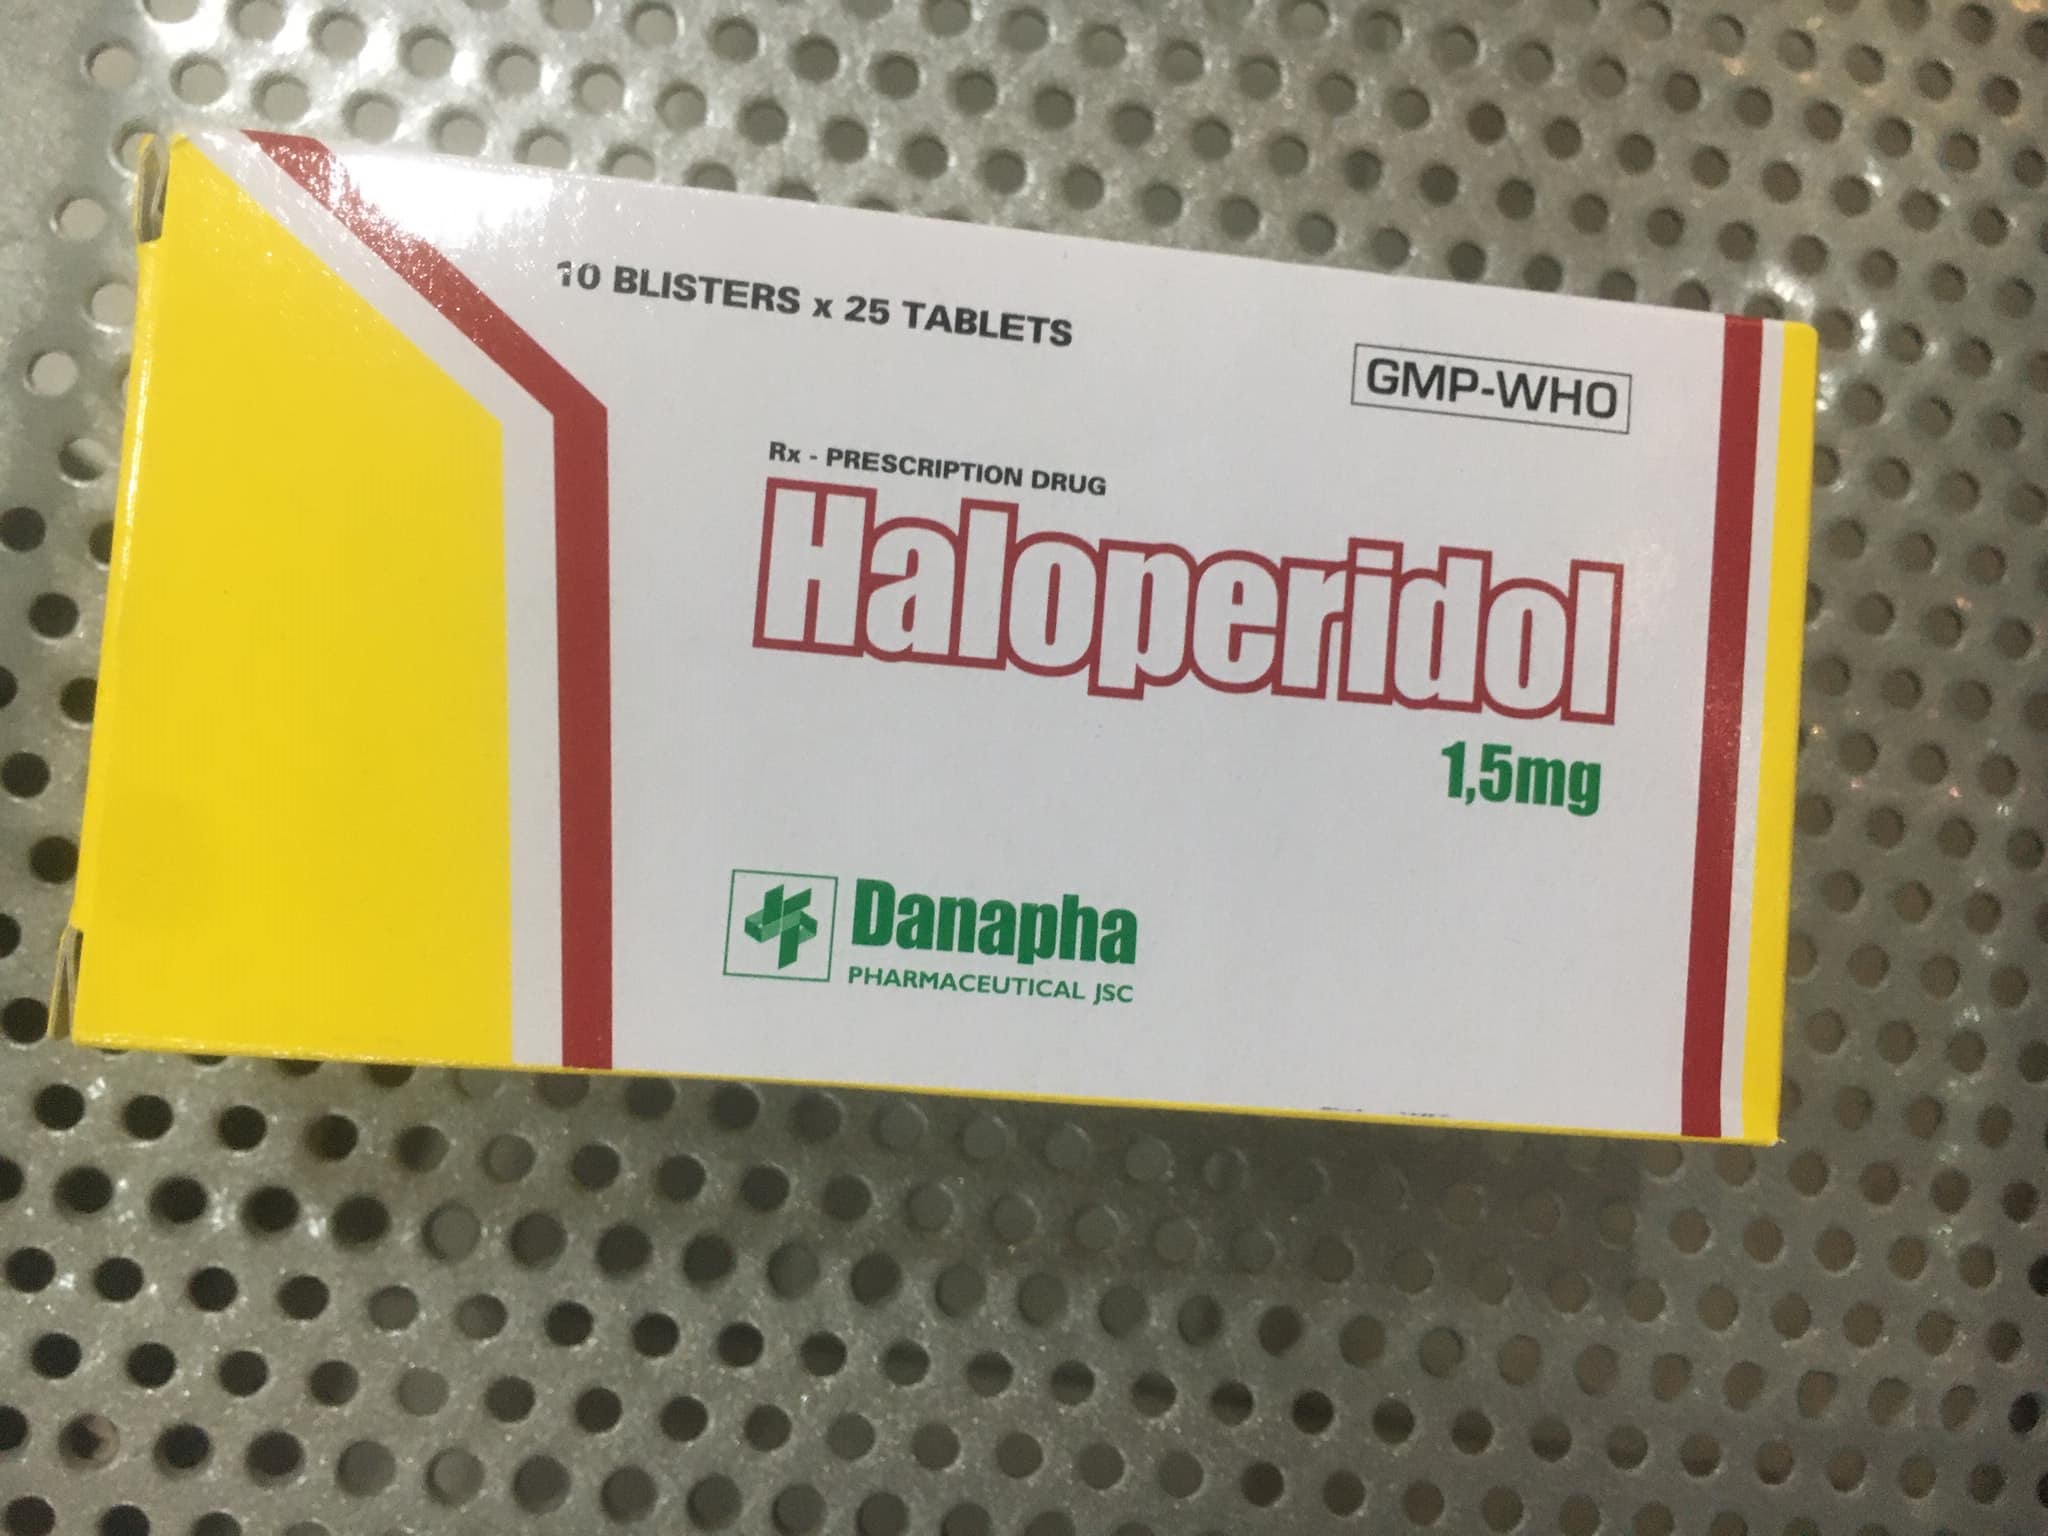 Haloperidol 1.5mg Danapha